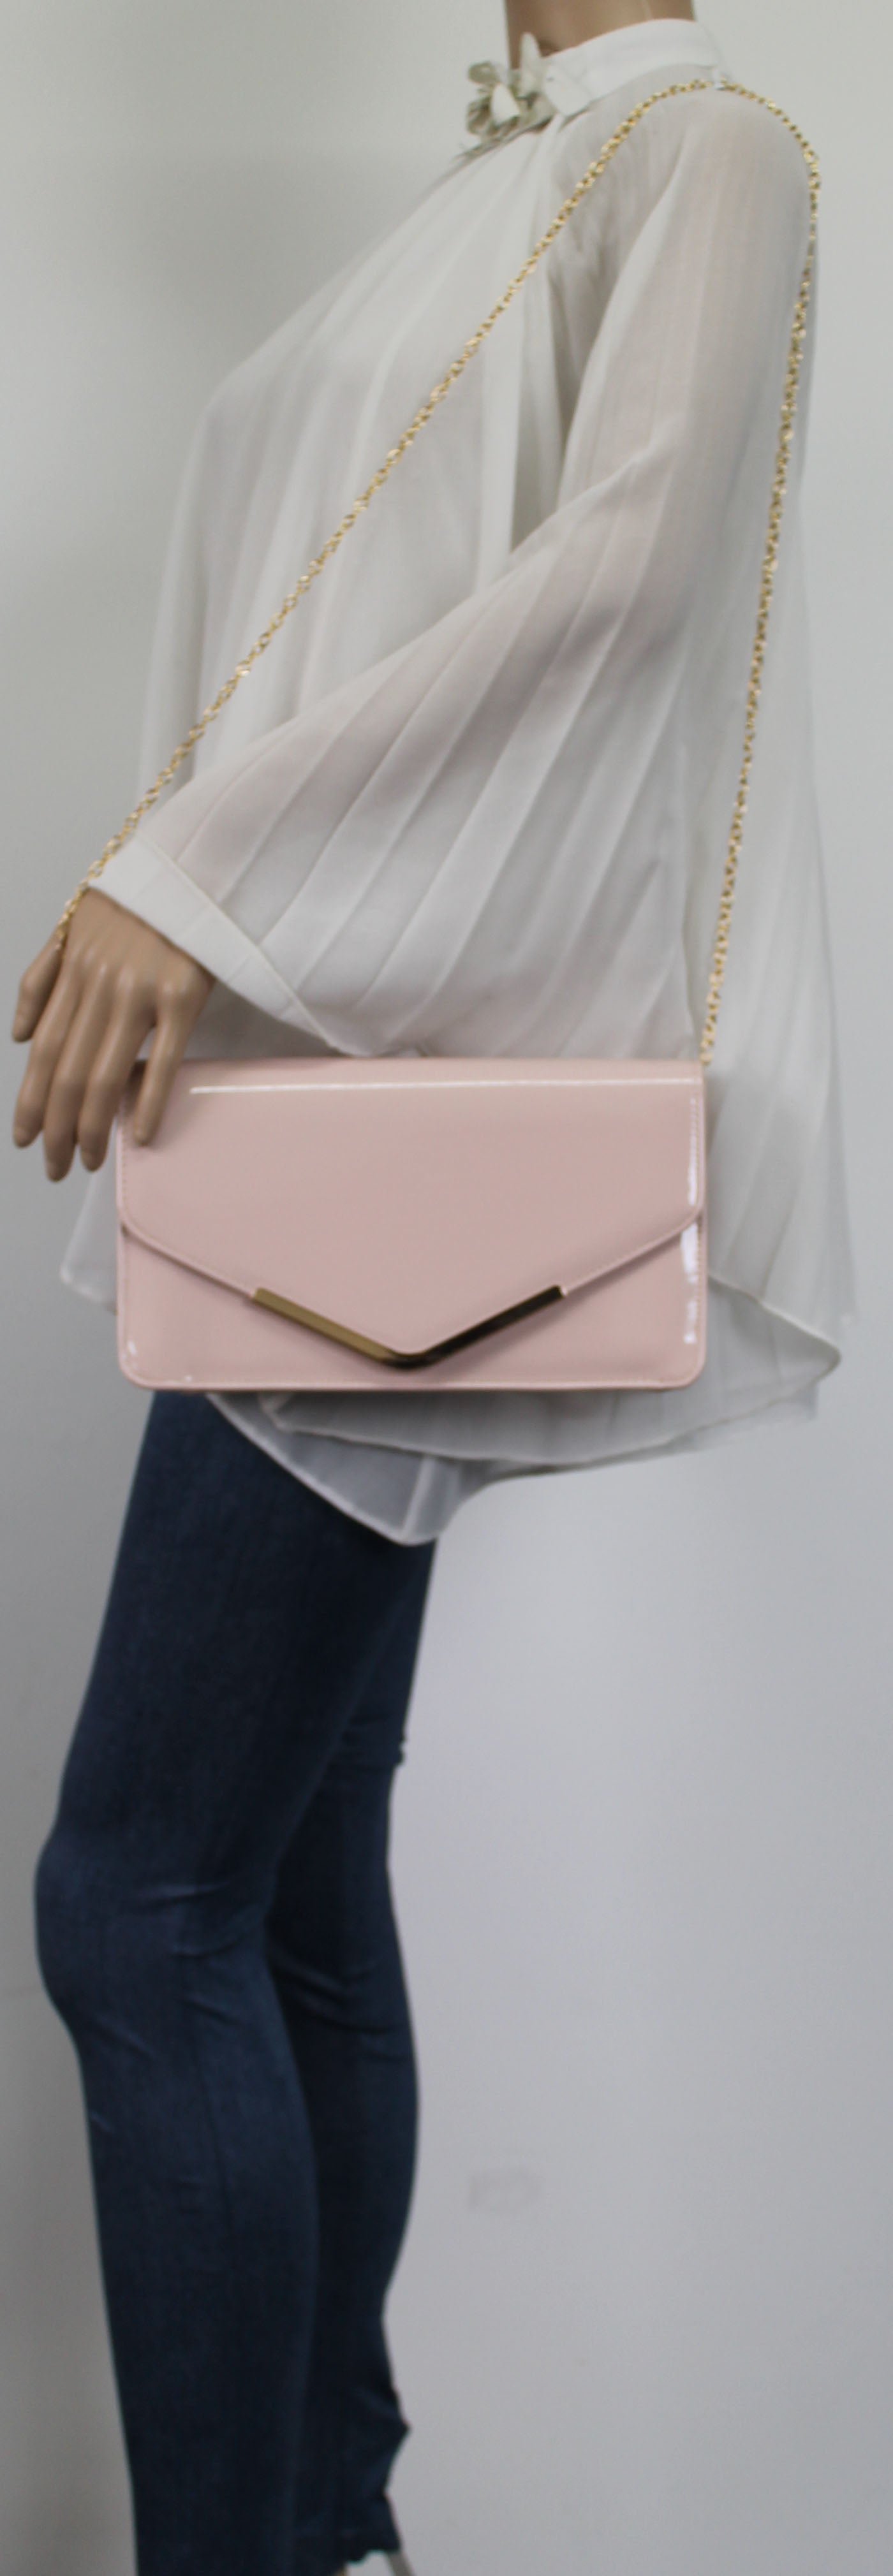 Paris Clutch Bag Pink